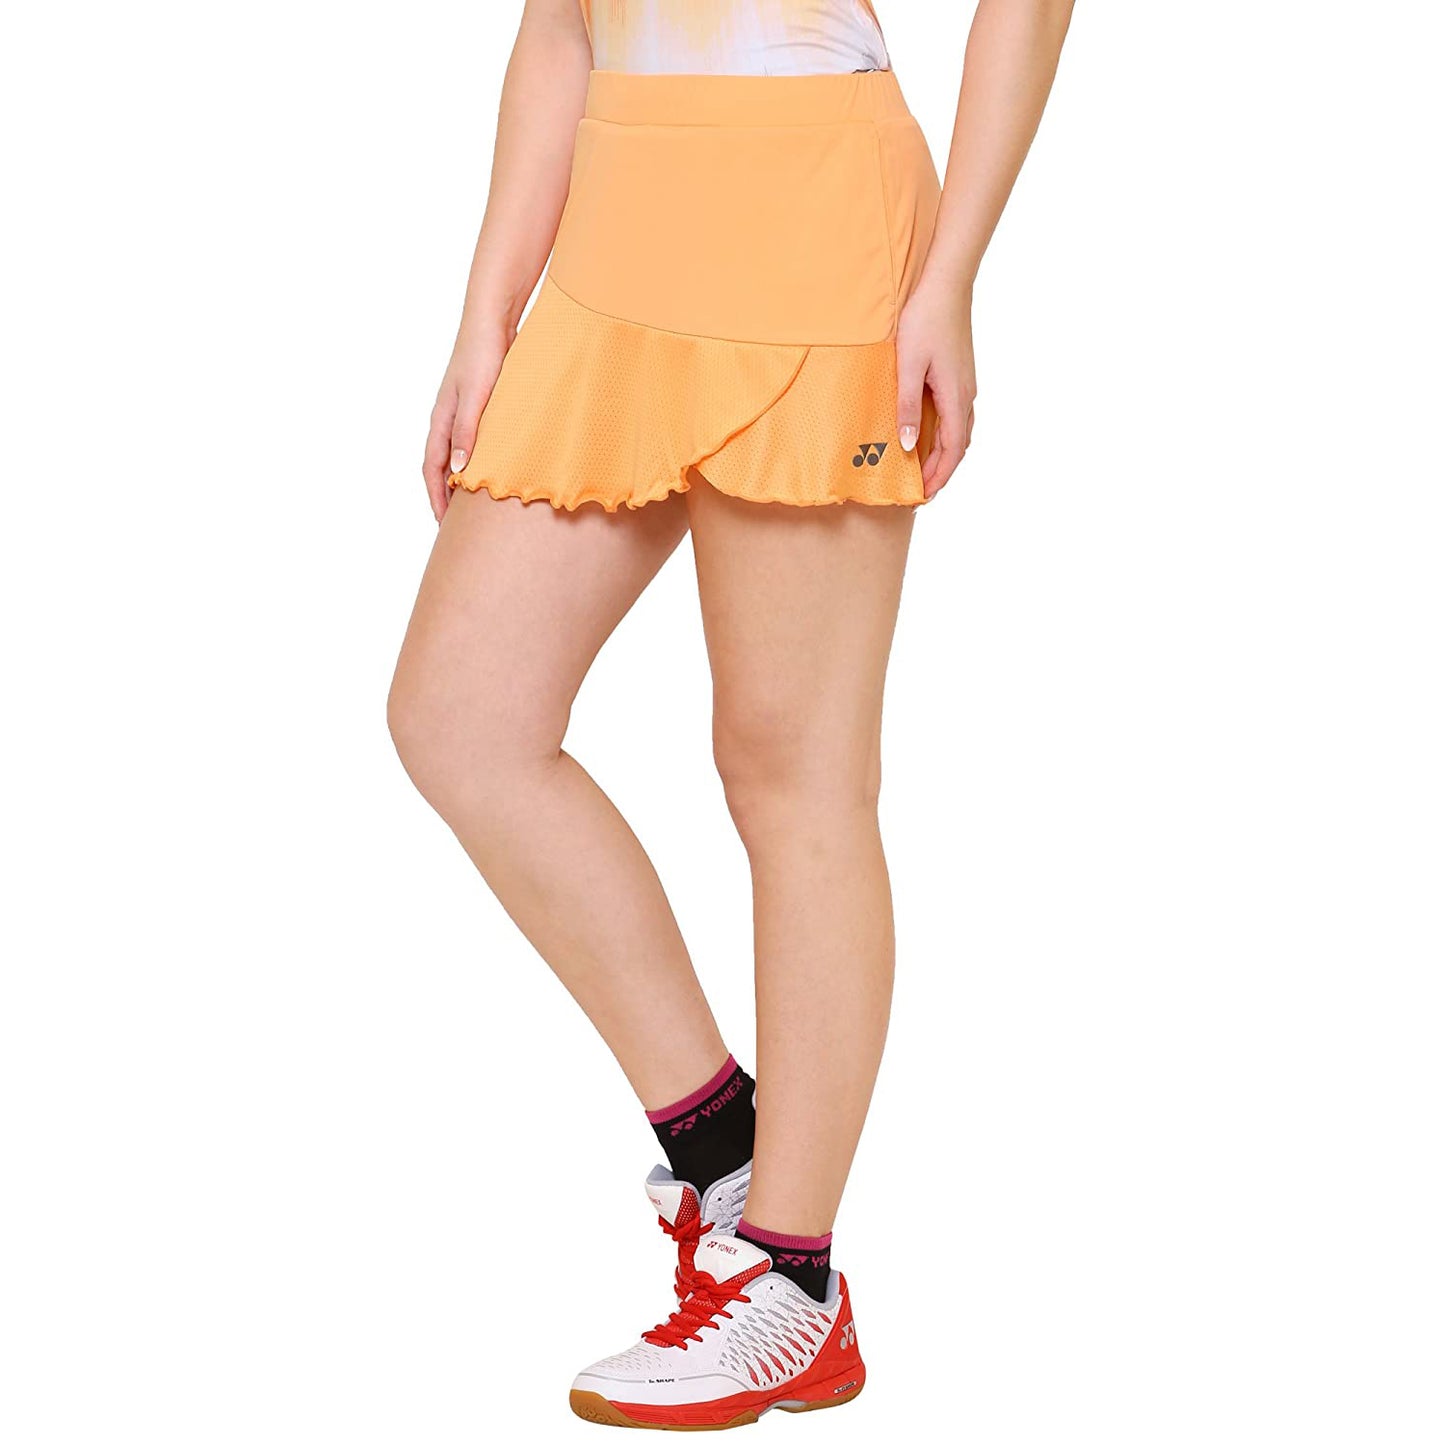 Yonex 26027 Skirt for Women, Mock Orange - Best Price online Prokicksports.com